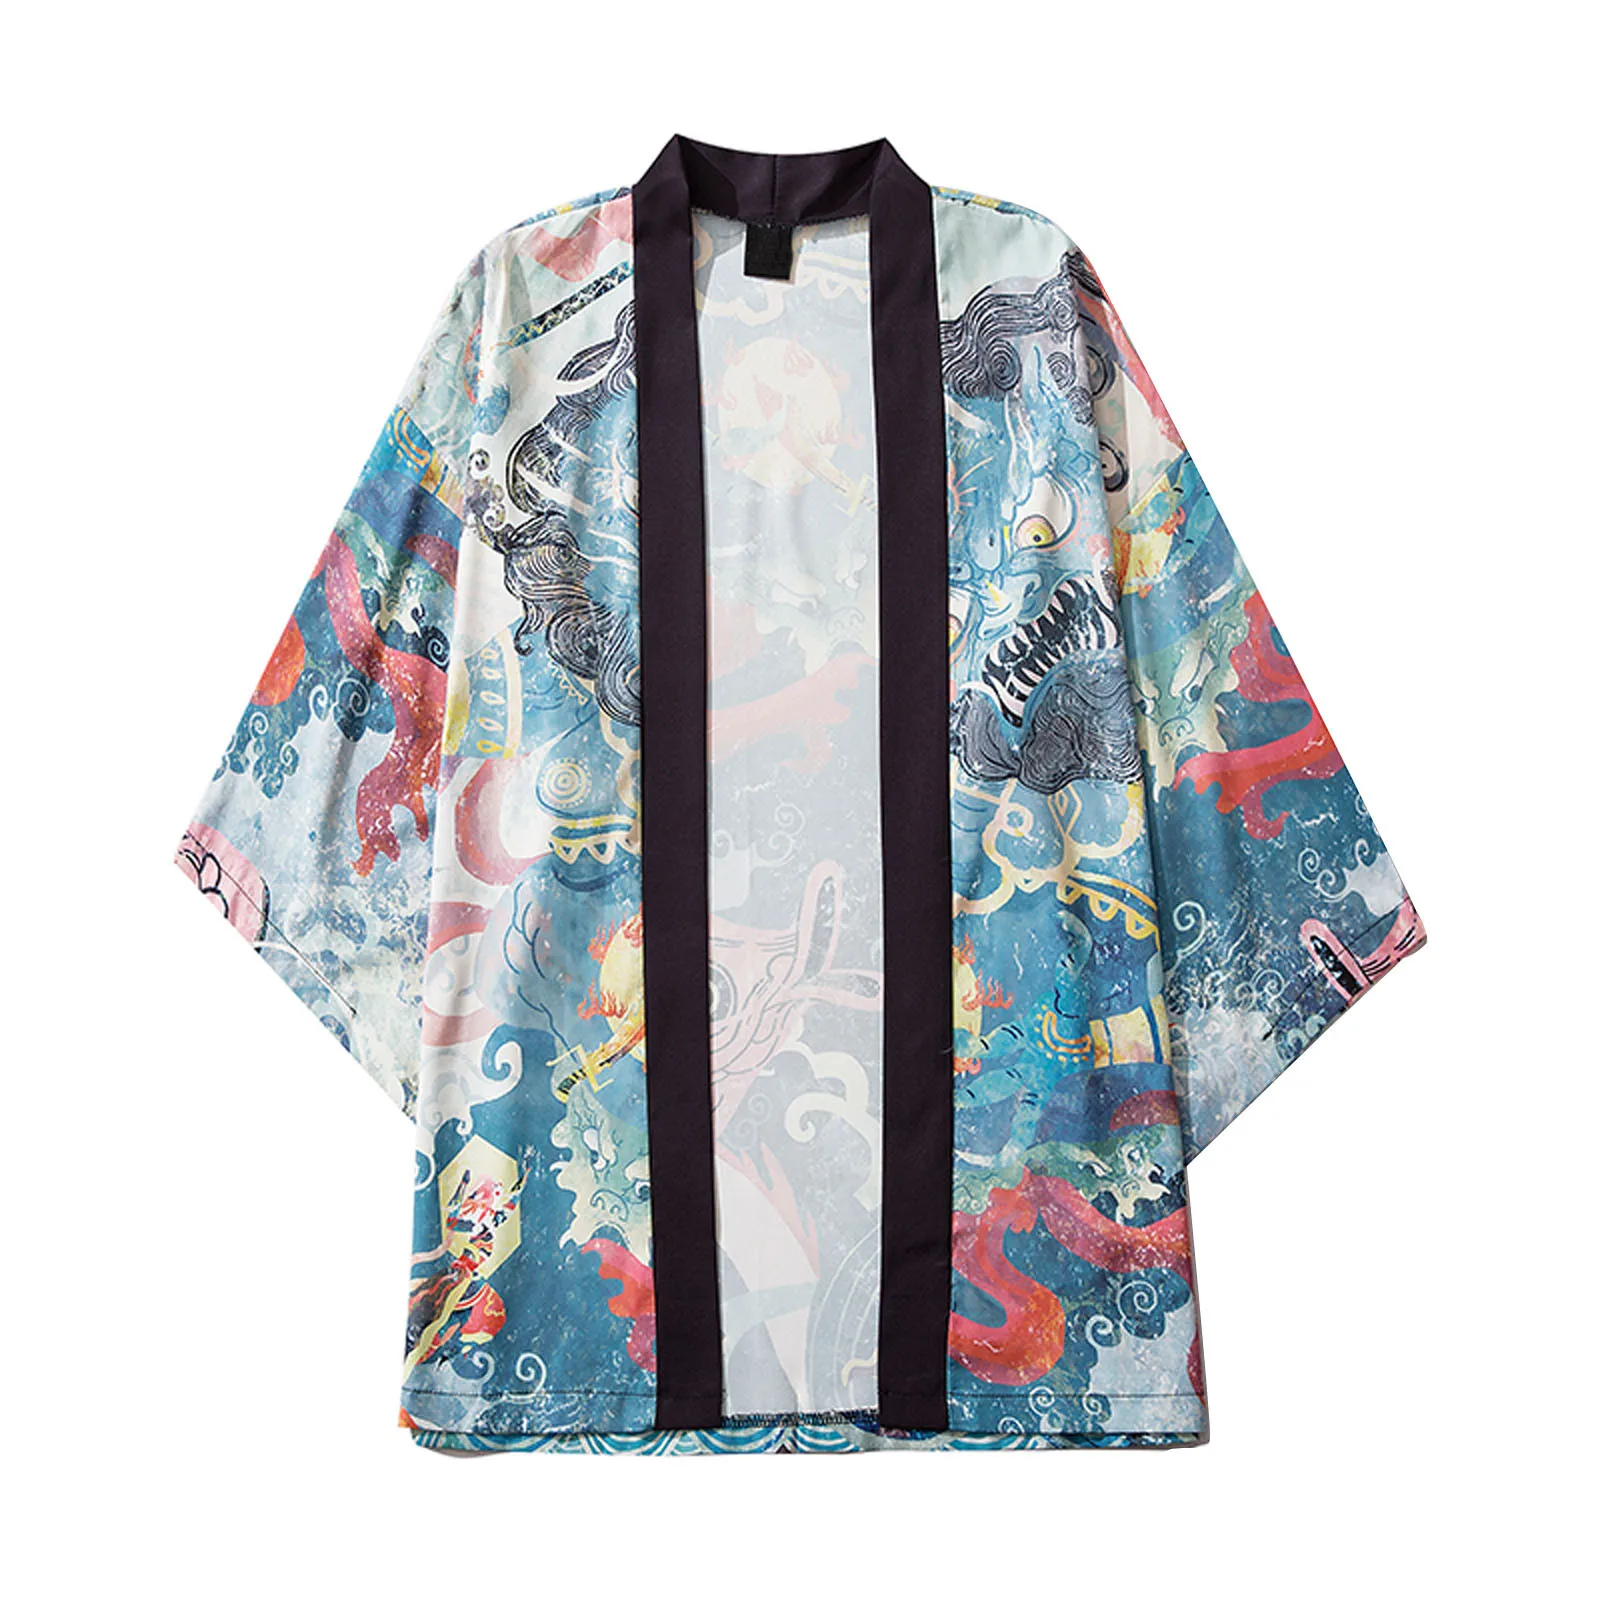 

Japanese Anime Kimono Men Casual Loose Shirts Open Front 3/4 Sleeve Japanese Ethnic Shirts Print Cover Up Cardigan Blusas Camisa